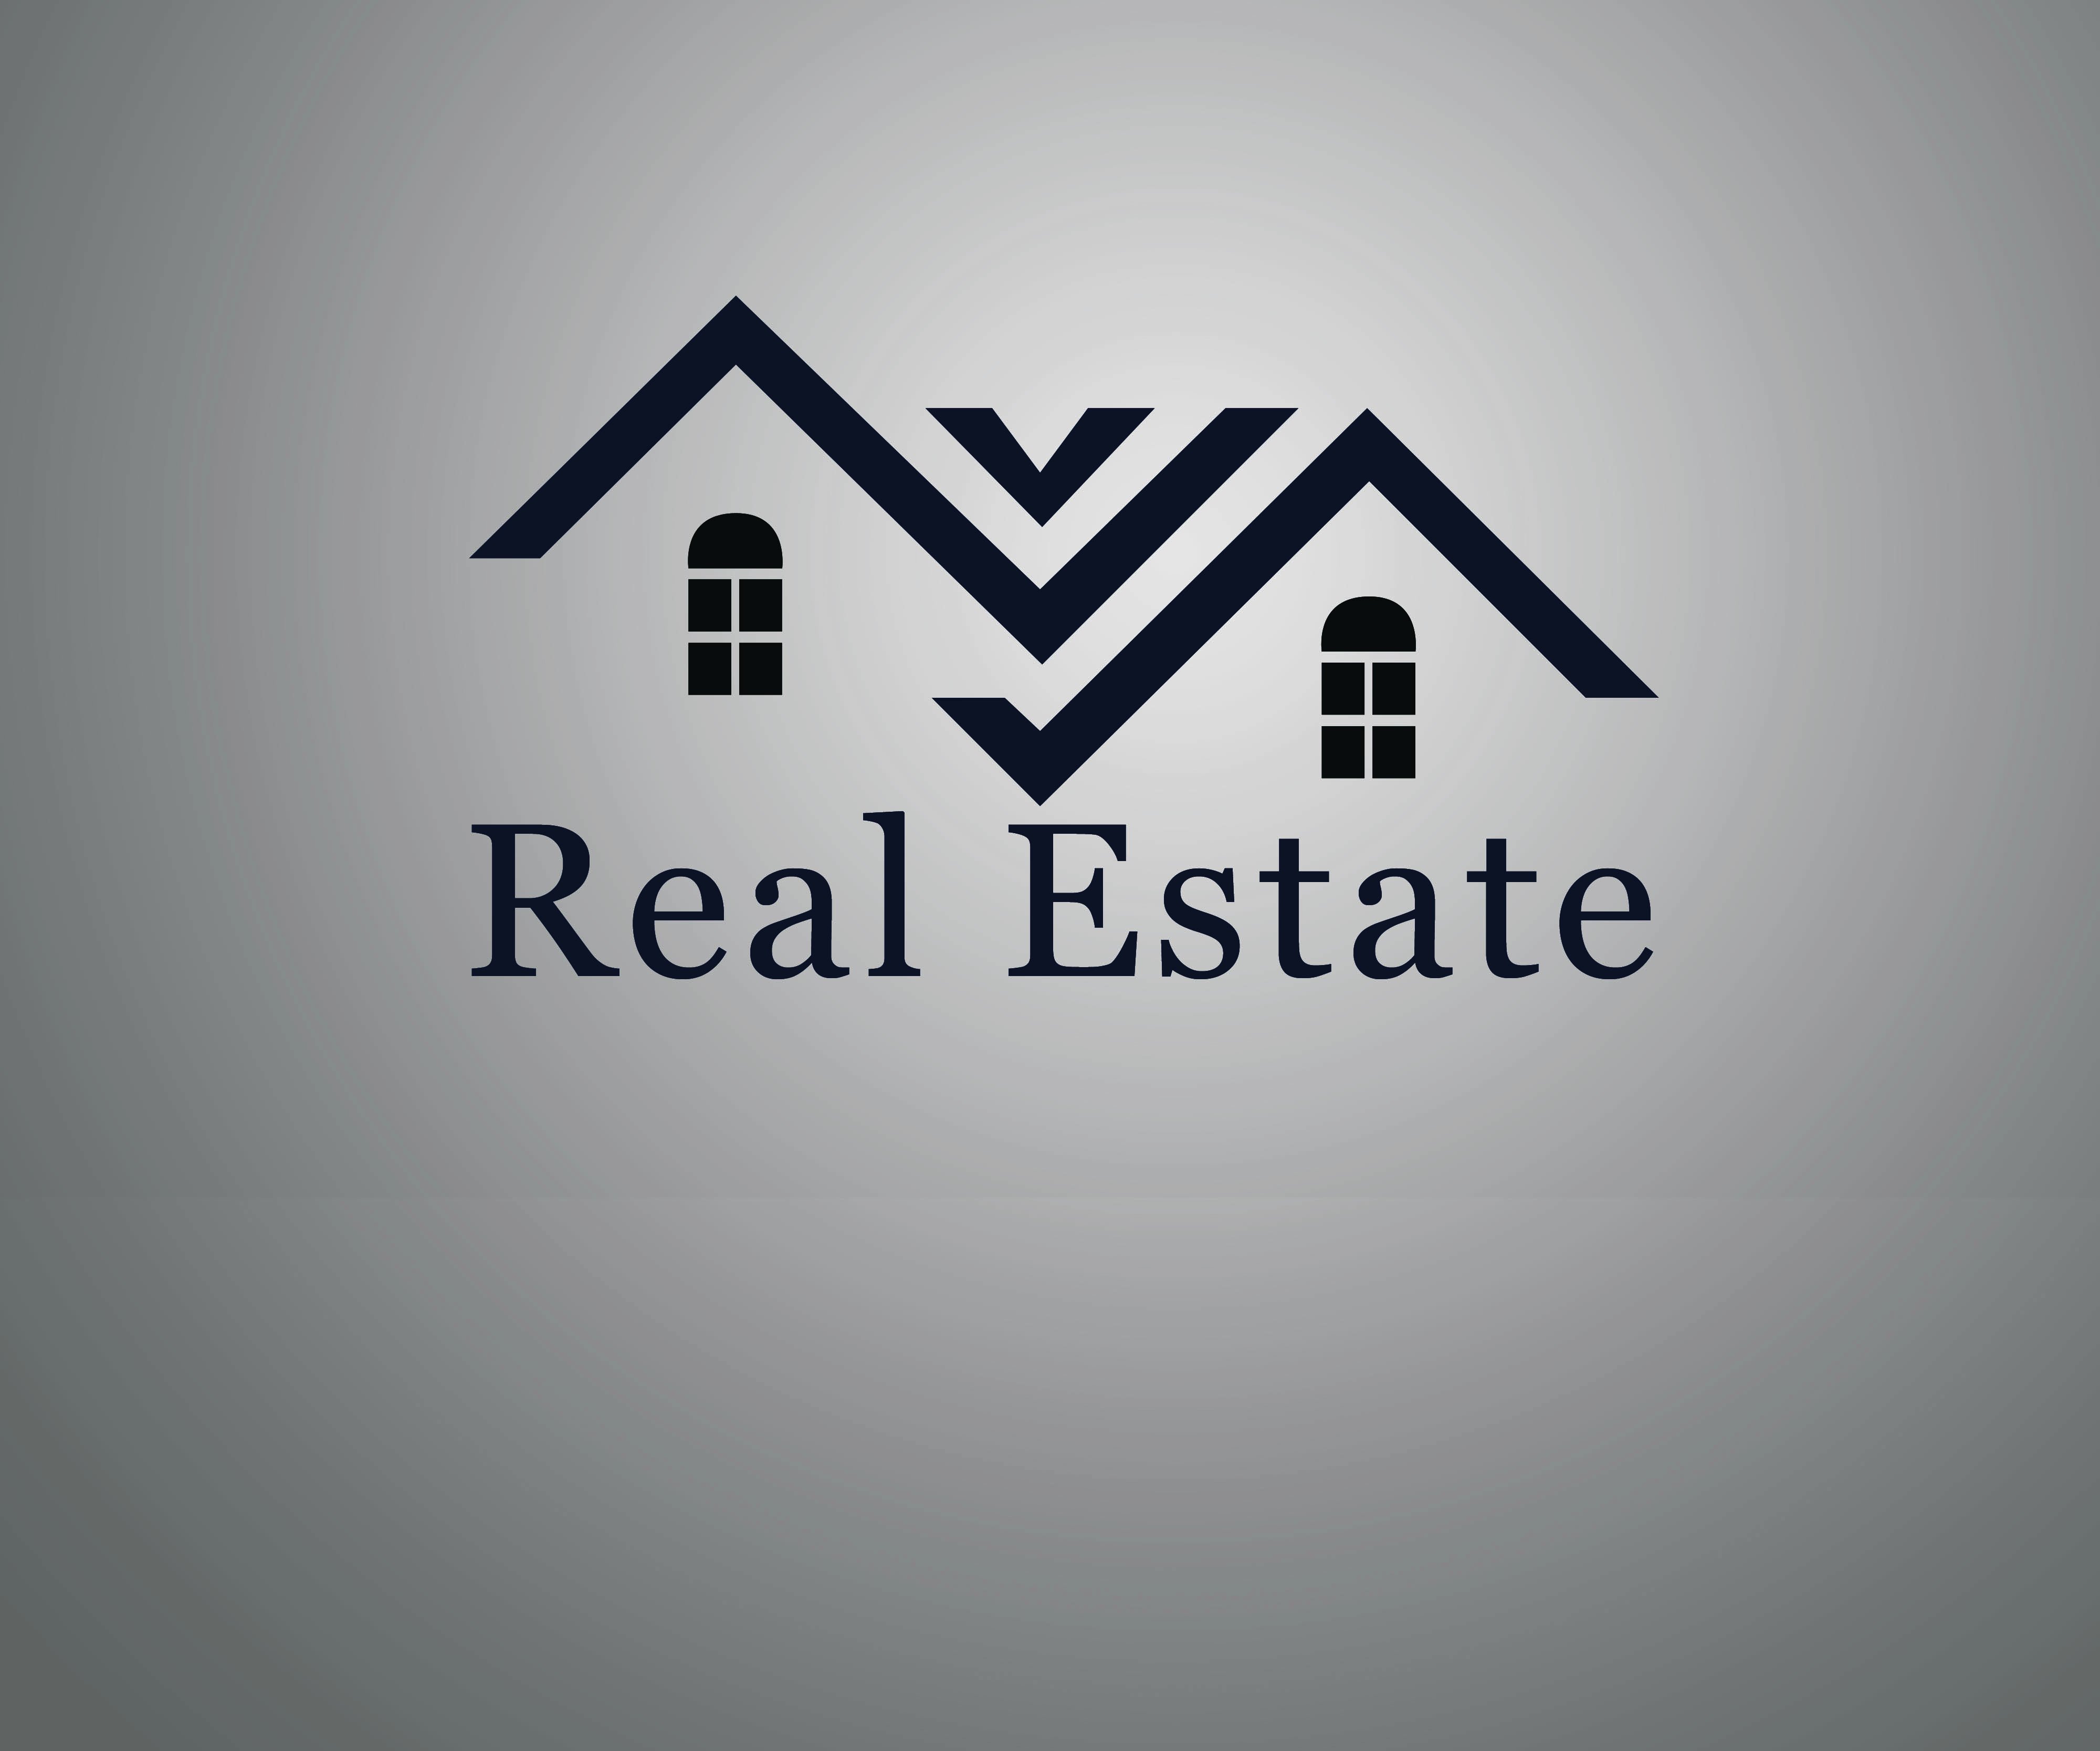 Real estate company. Логотип недвижимость. Логотип дом. Логотип риэлторской компании. Логотип строительной компании.